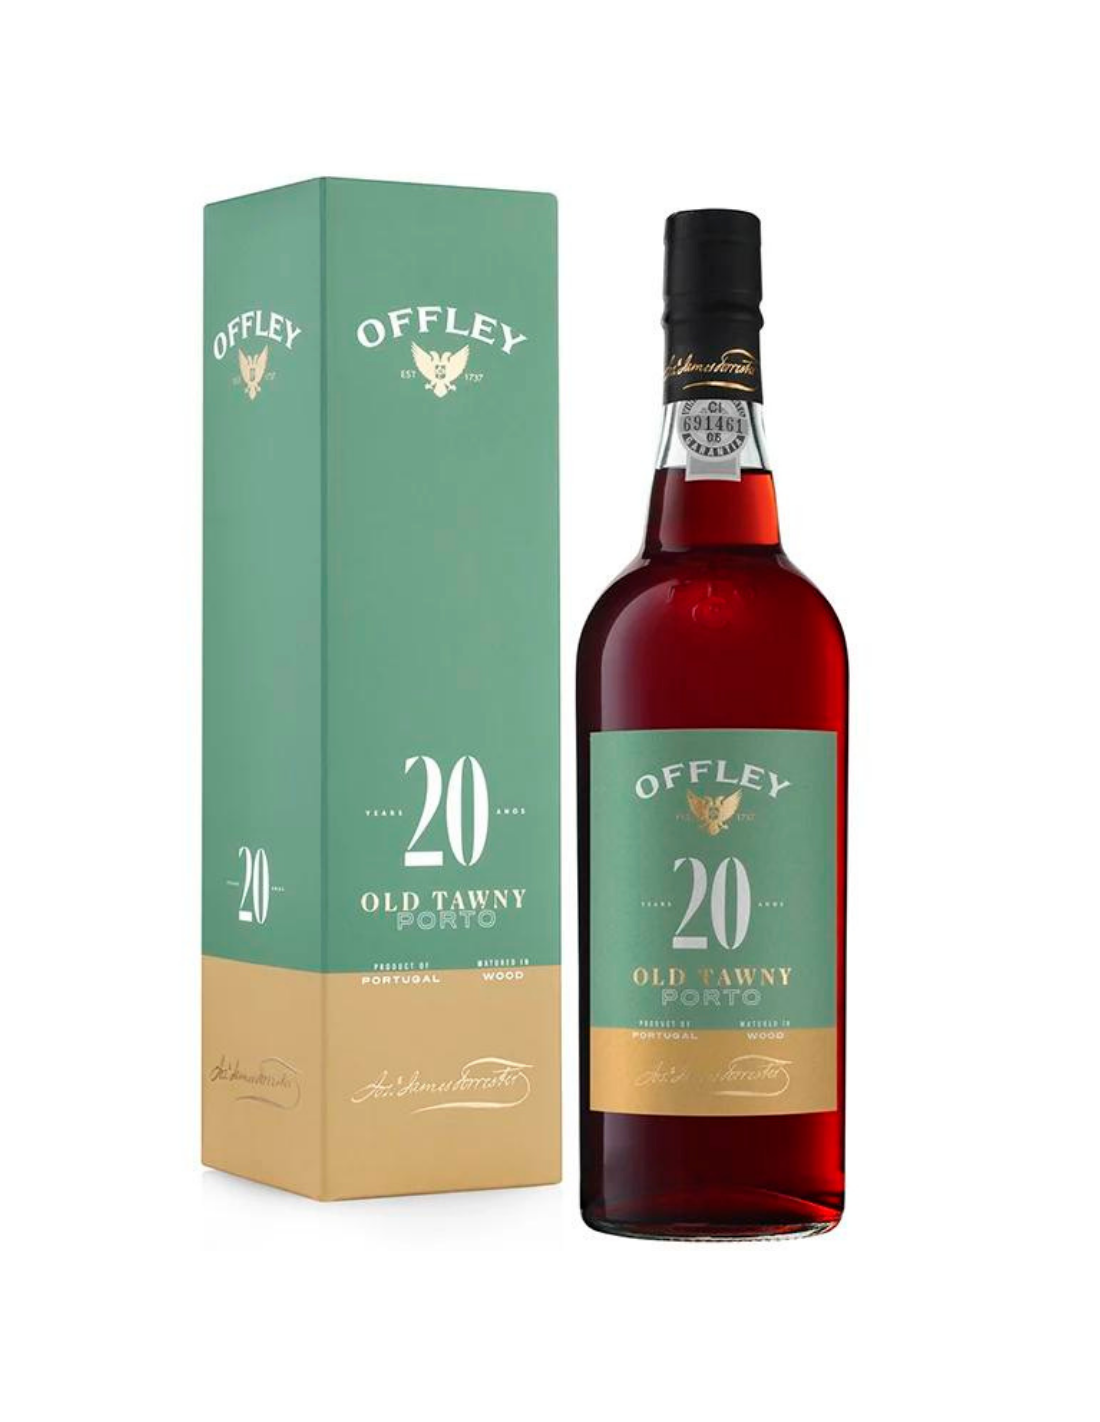 Vin porto rosu Offley 20 Years Old Tawny, 0.75L, 20% alc., Portugalia alcooldiscount.ro